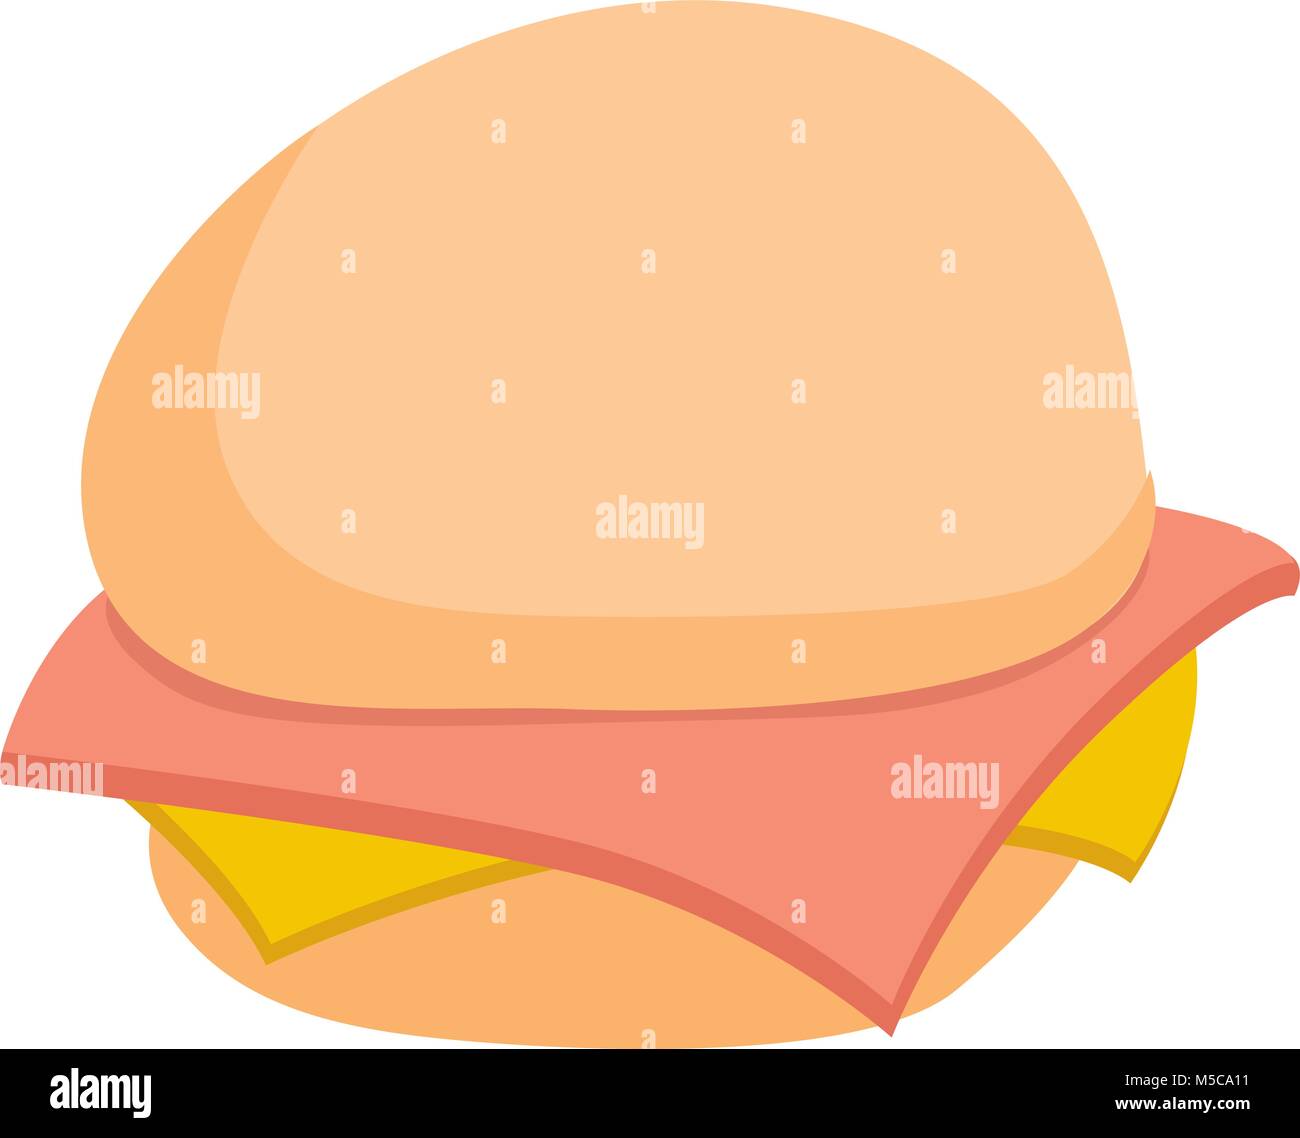 Cartoon illustration of ham and cheese sandwich Stock Vector